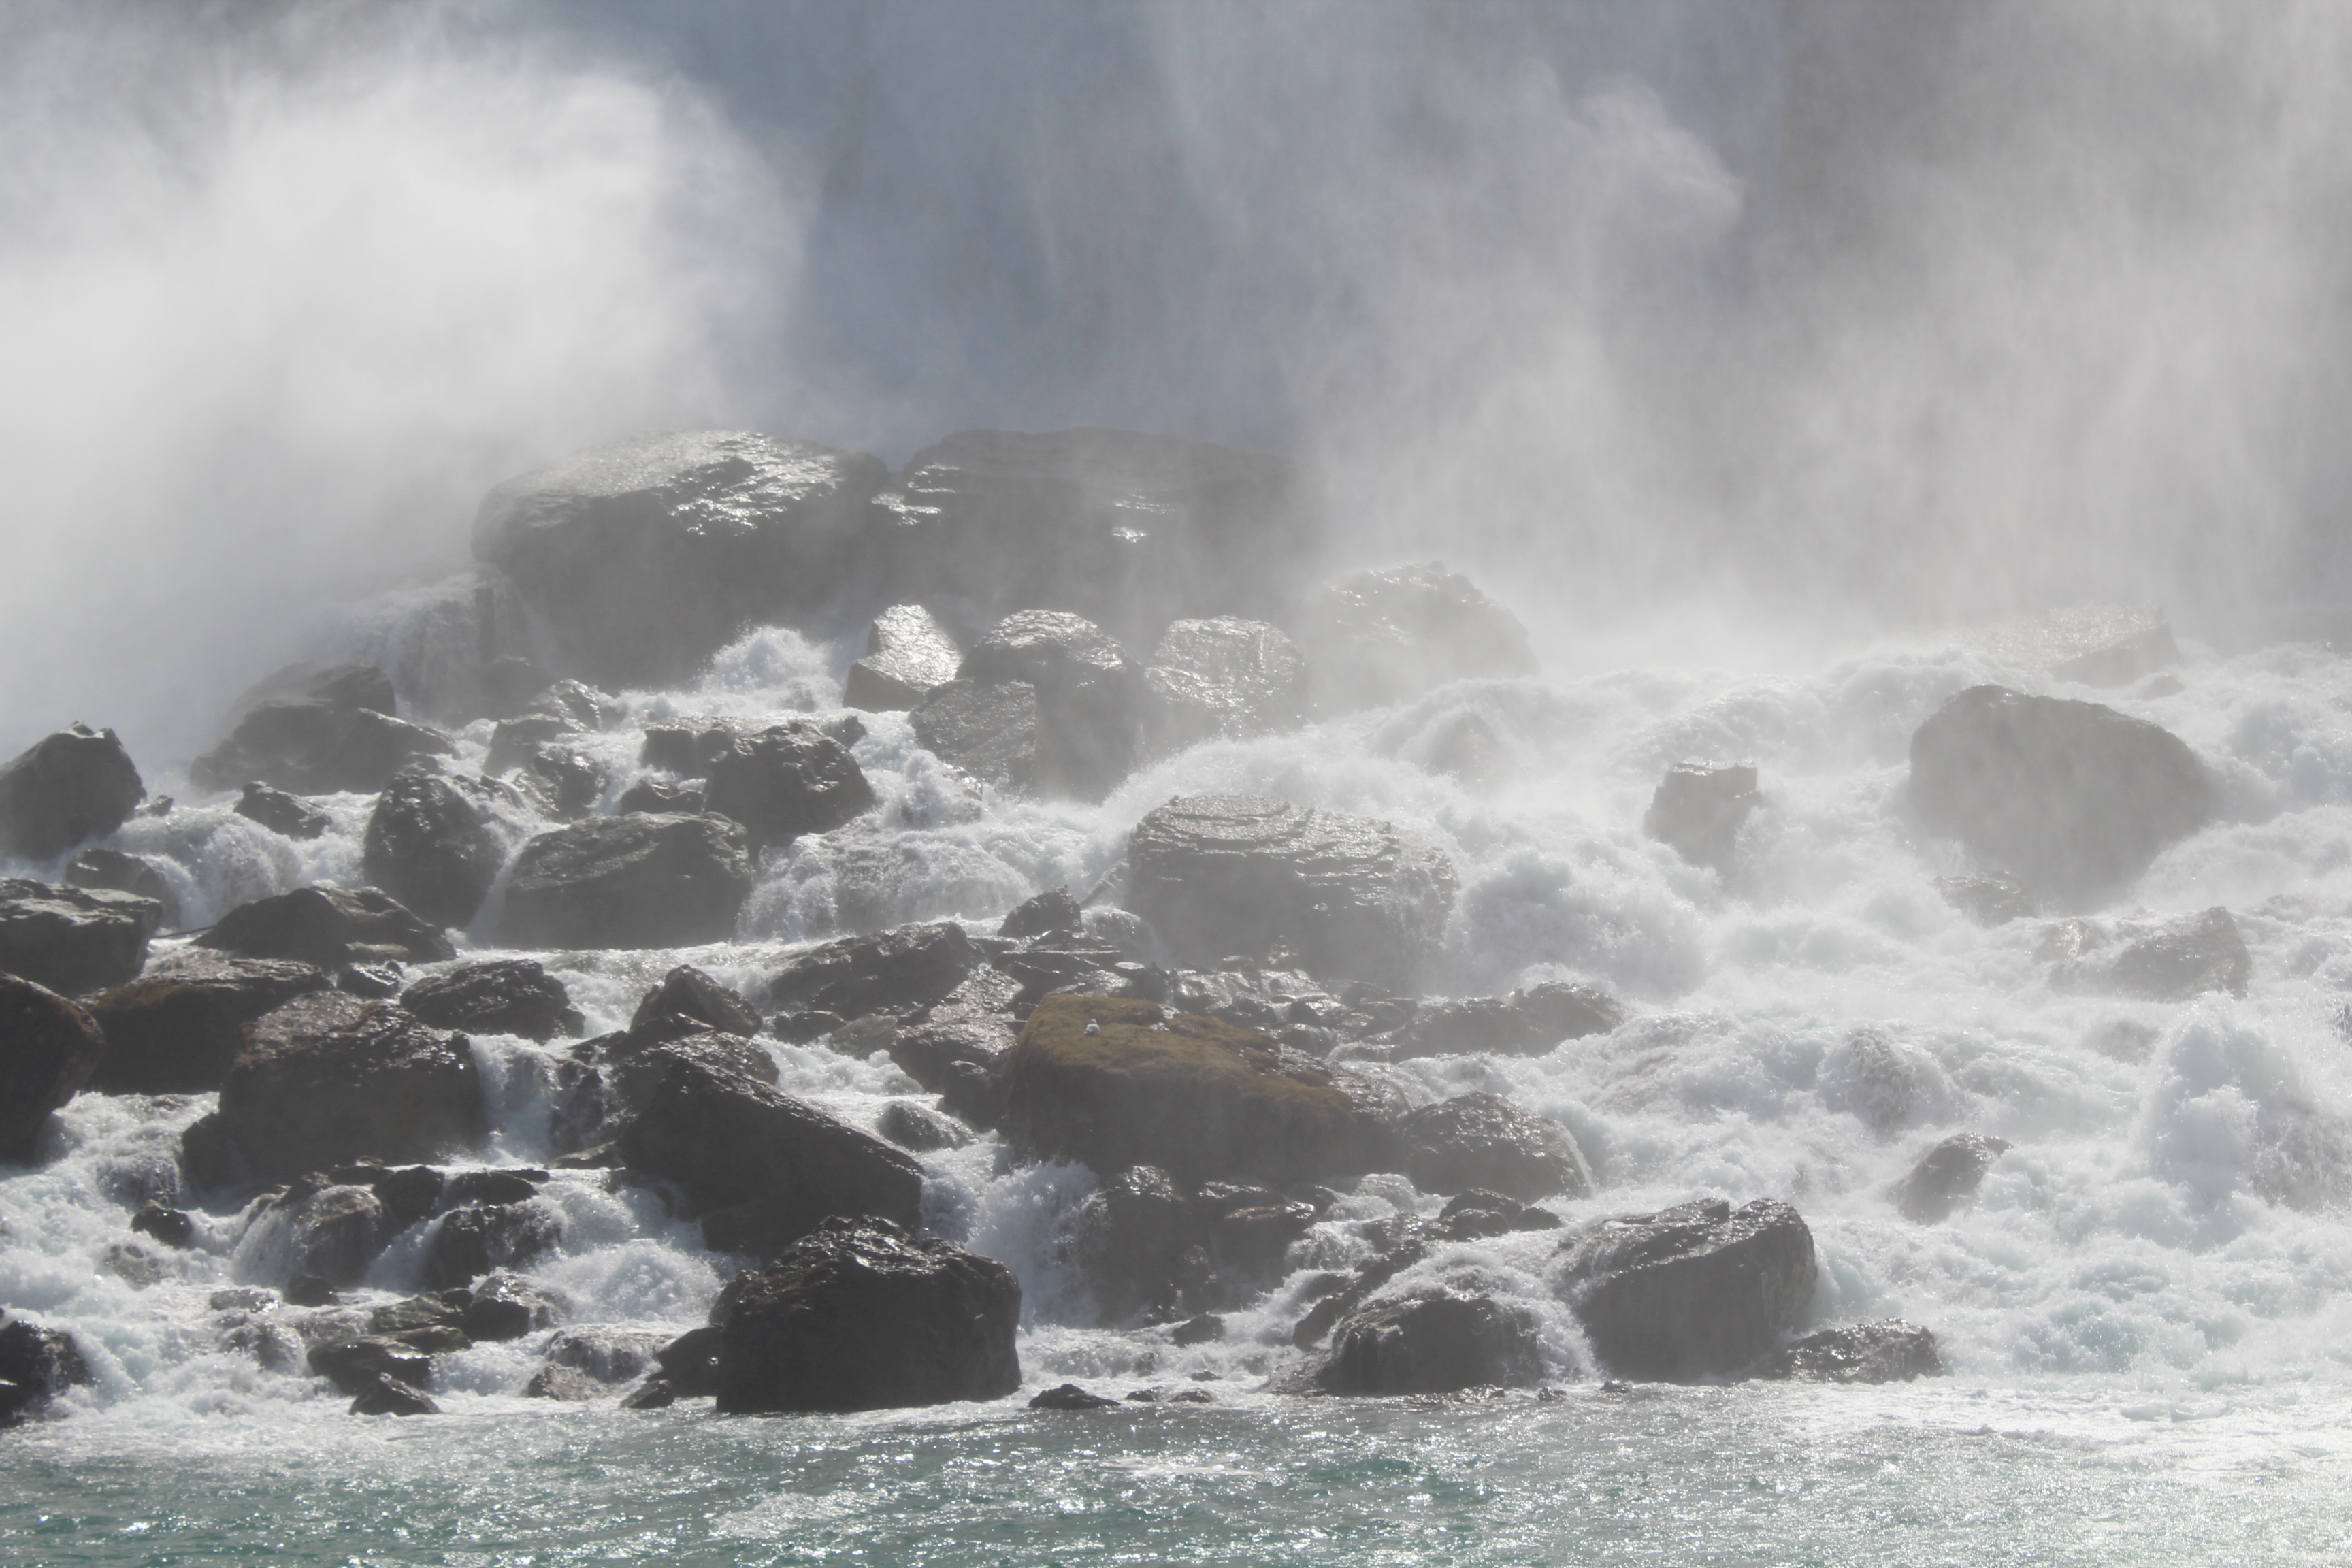 Splashing Niagra Falls water on the stones